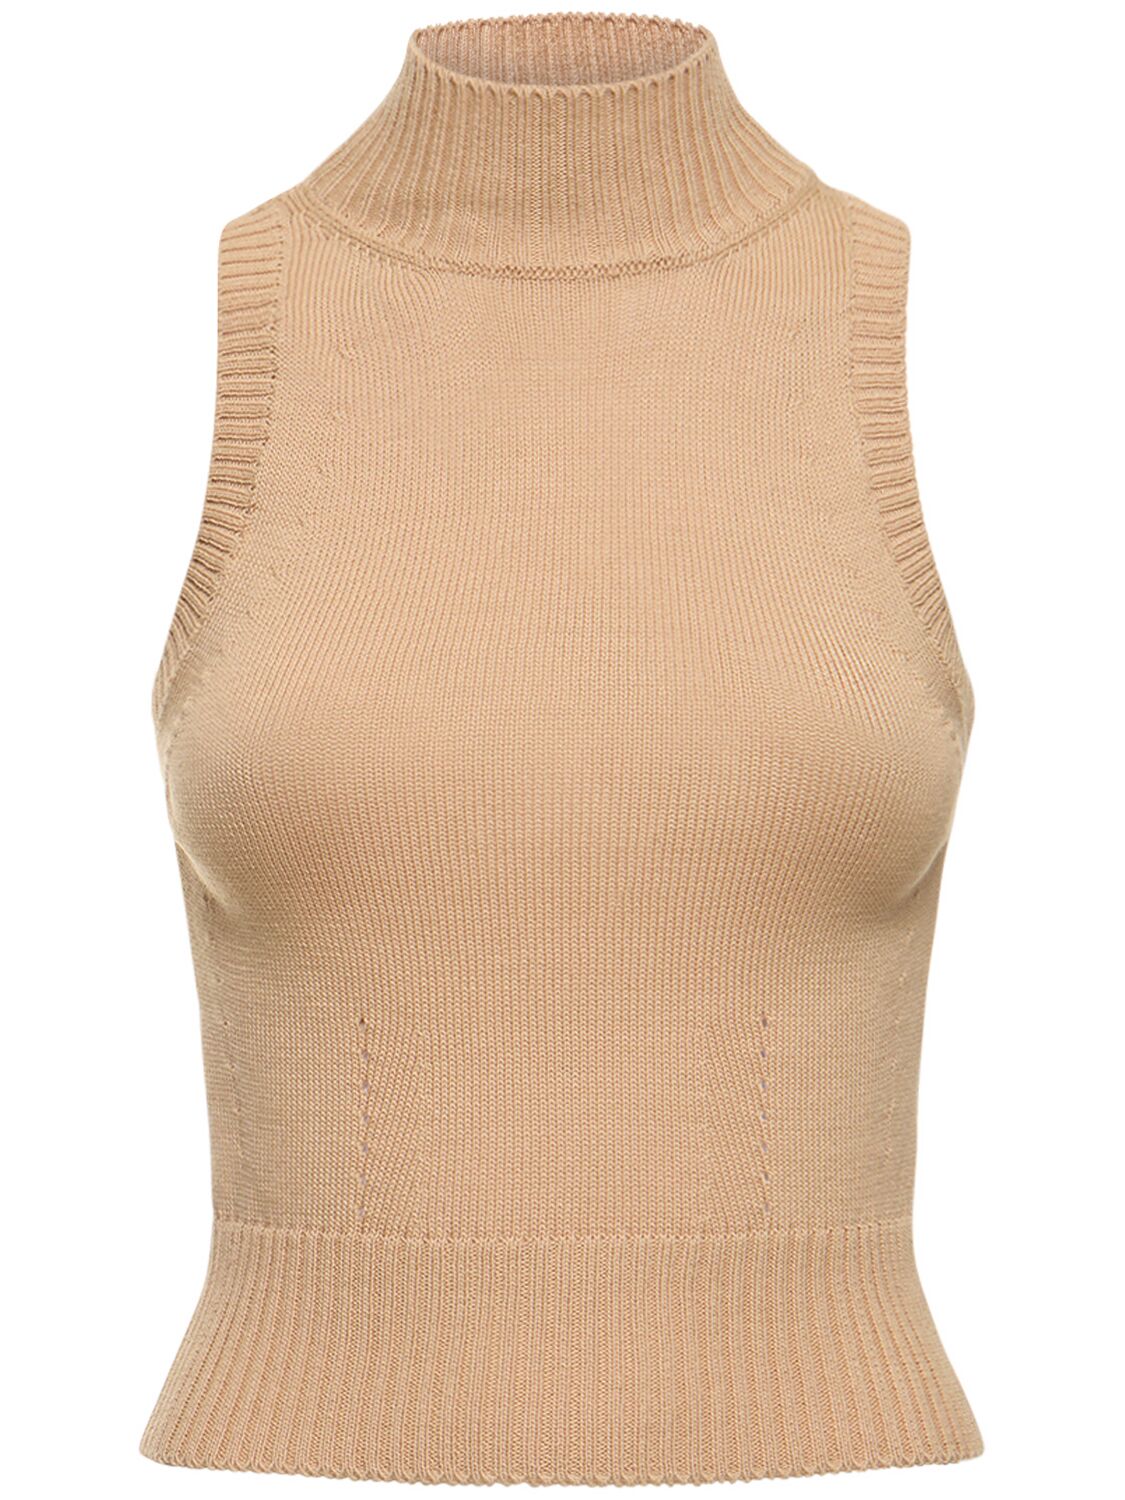 Image of Cotton Knit Turtleneck Sleeveless Top